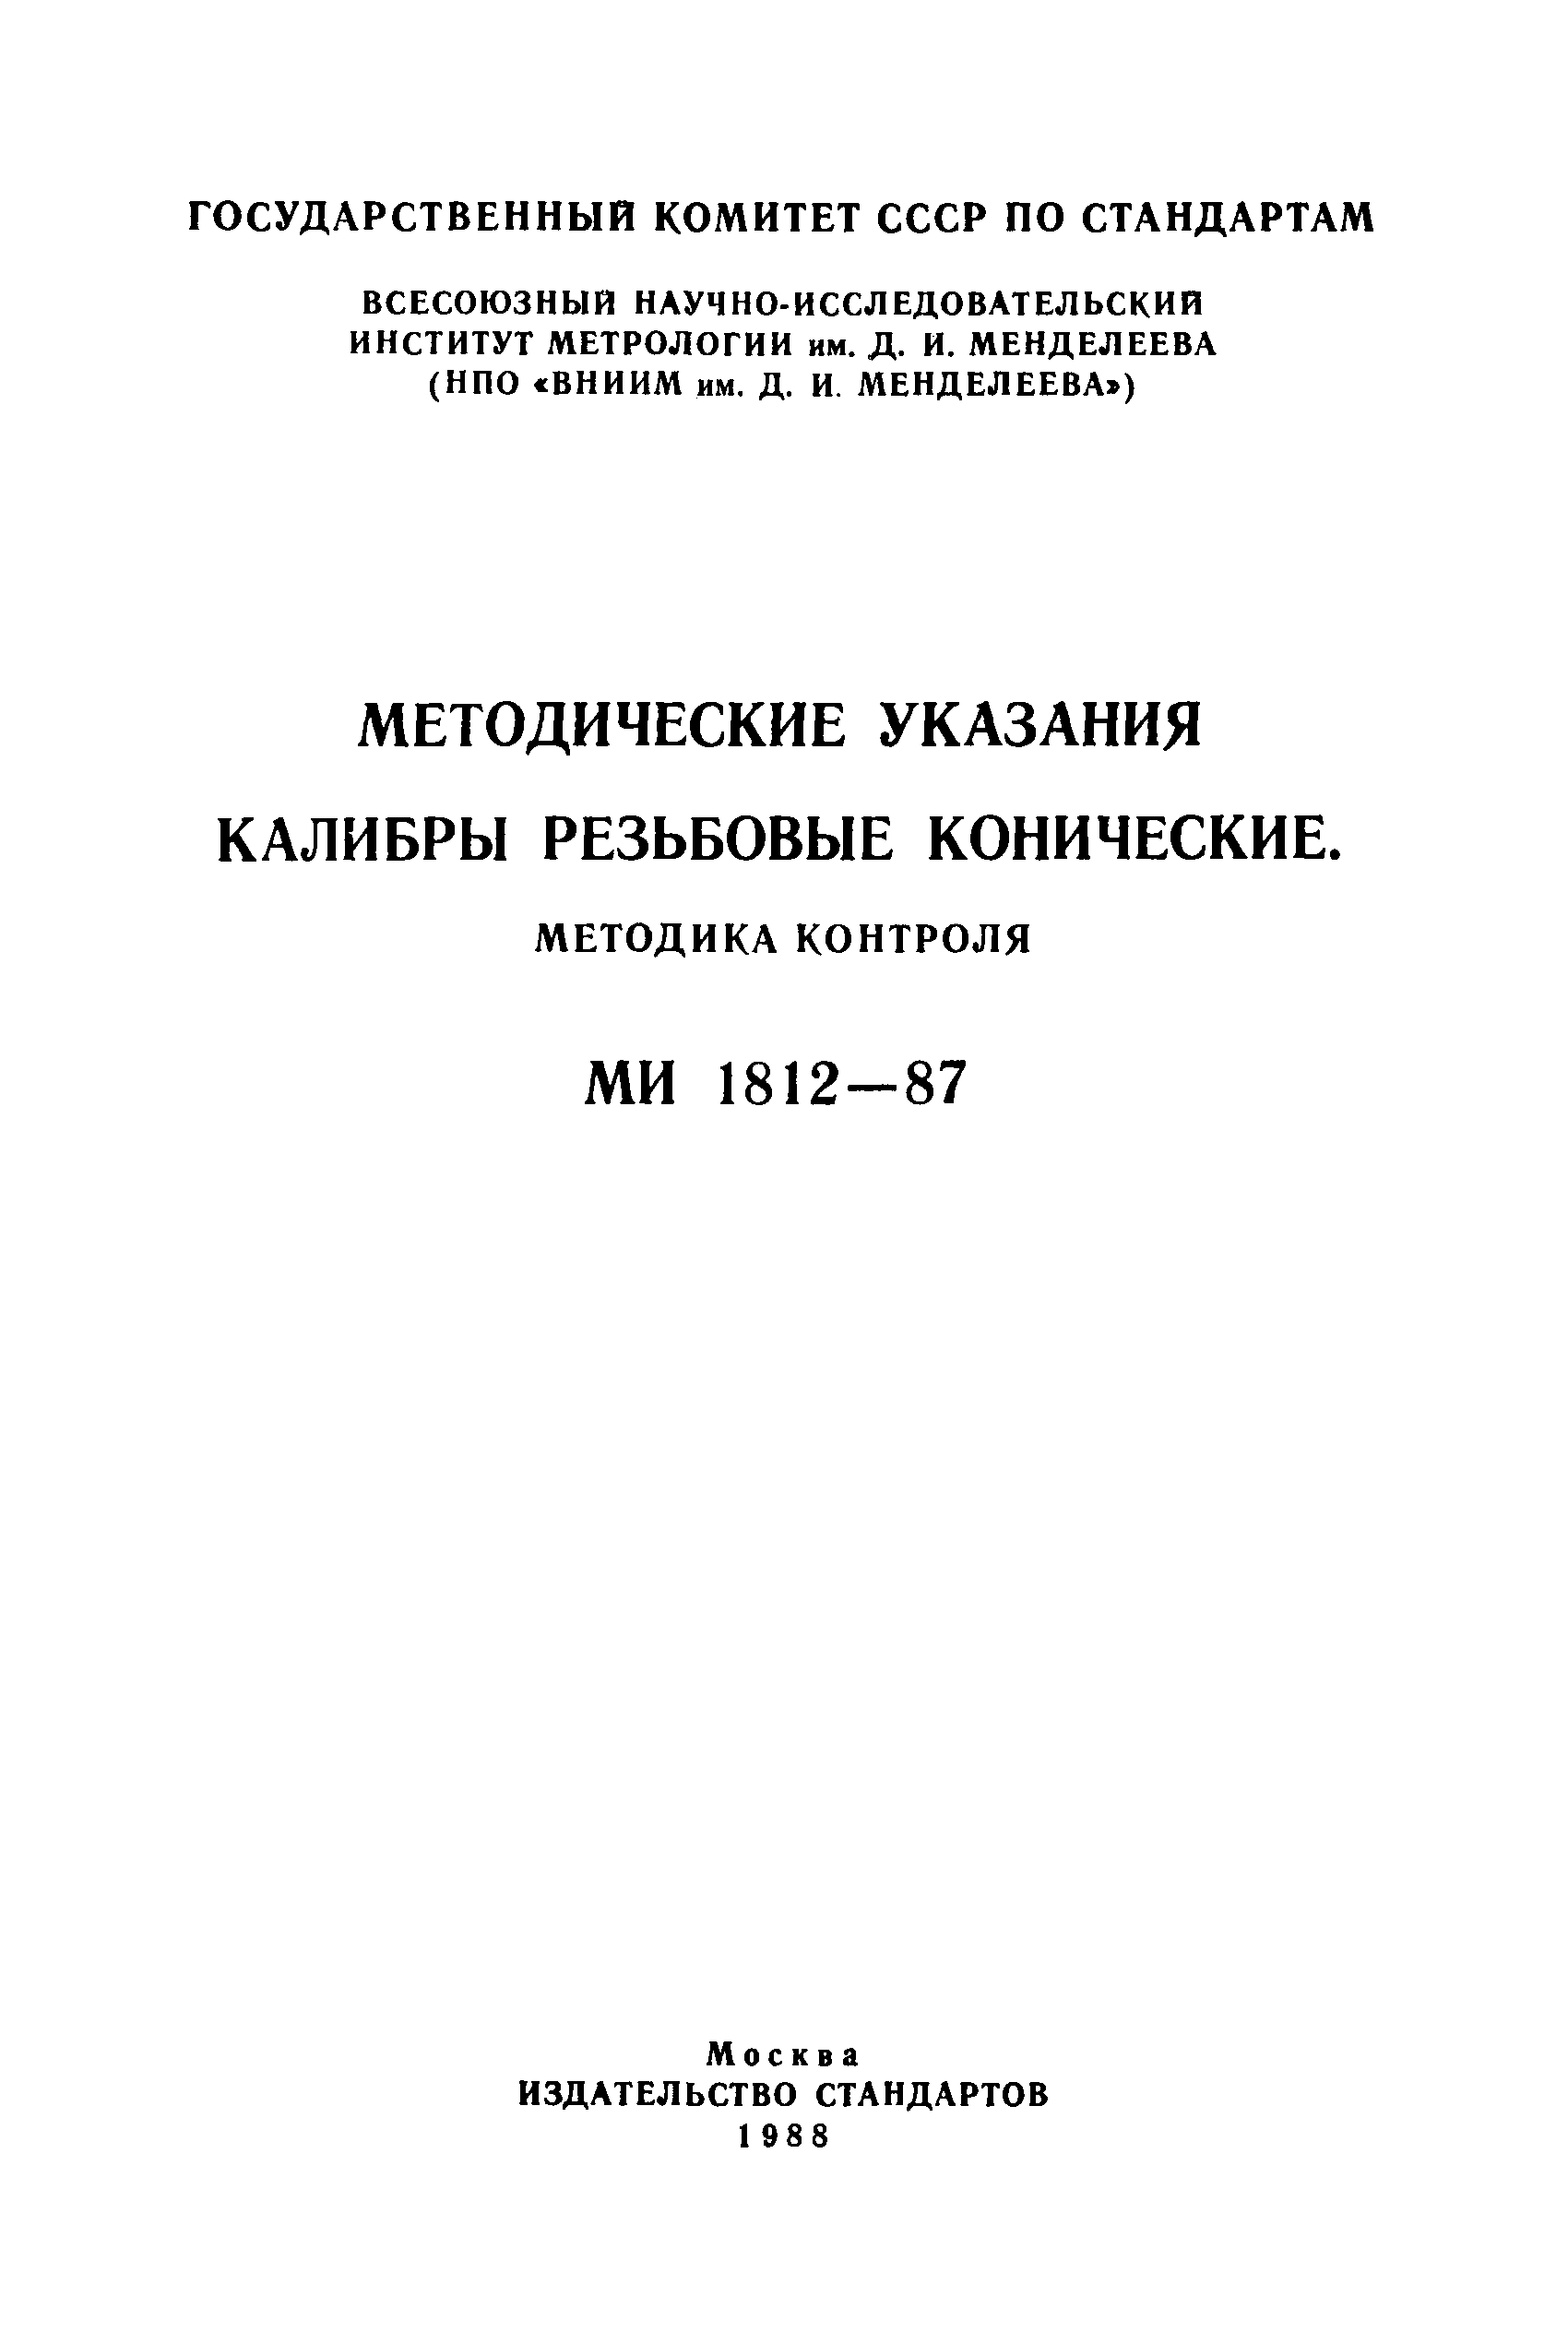 МИ 1812-87